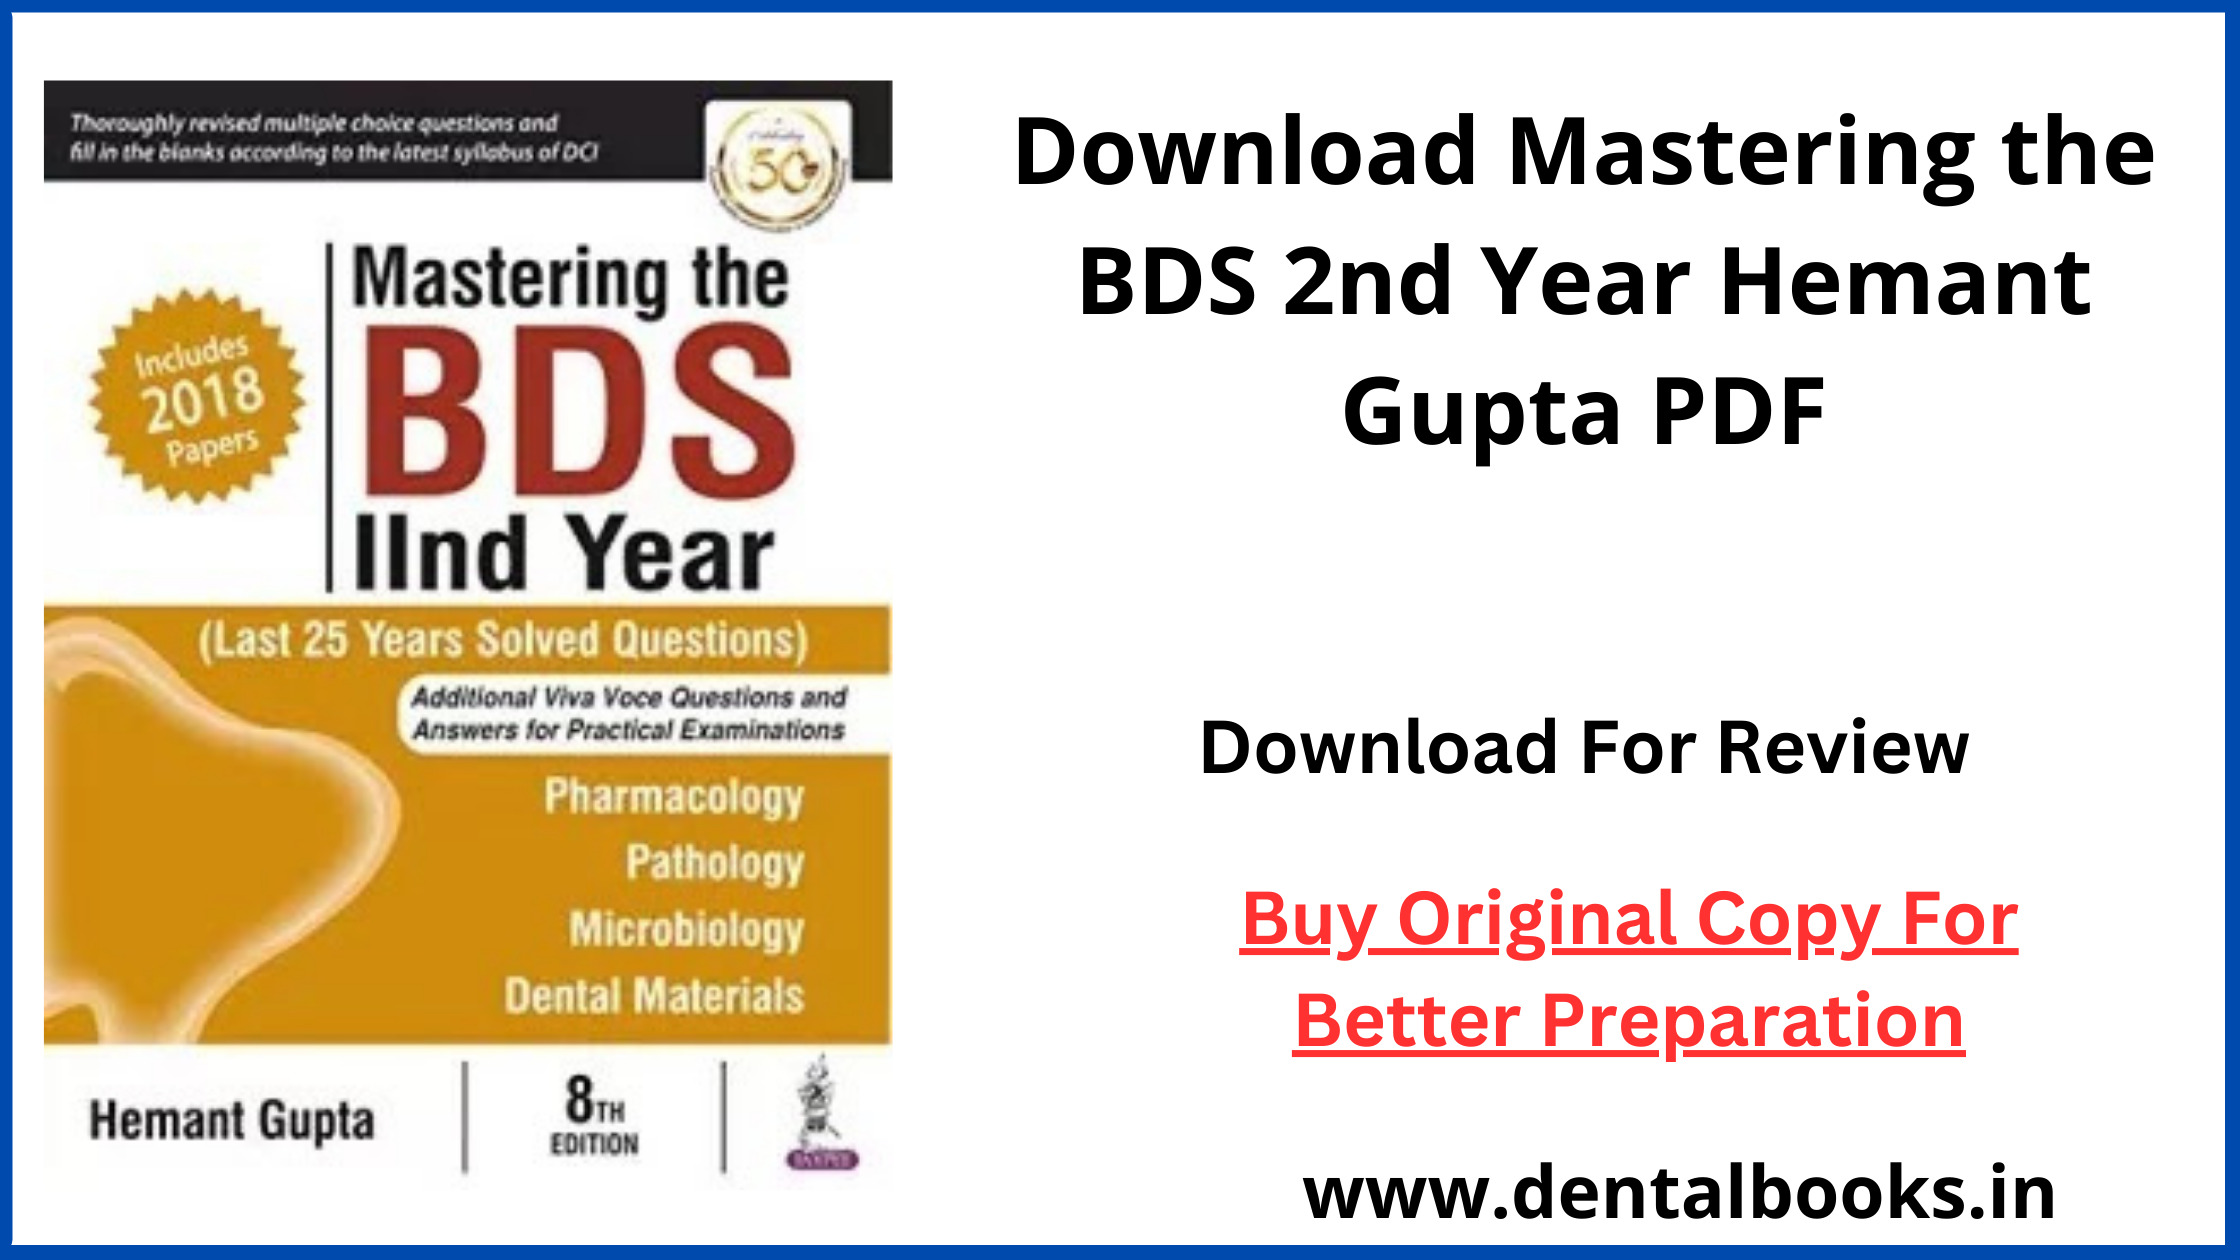 Download Mastering the BDS 2nd Year Hemant Gupta PDF